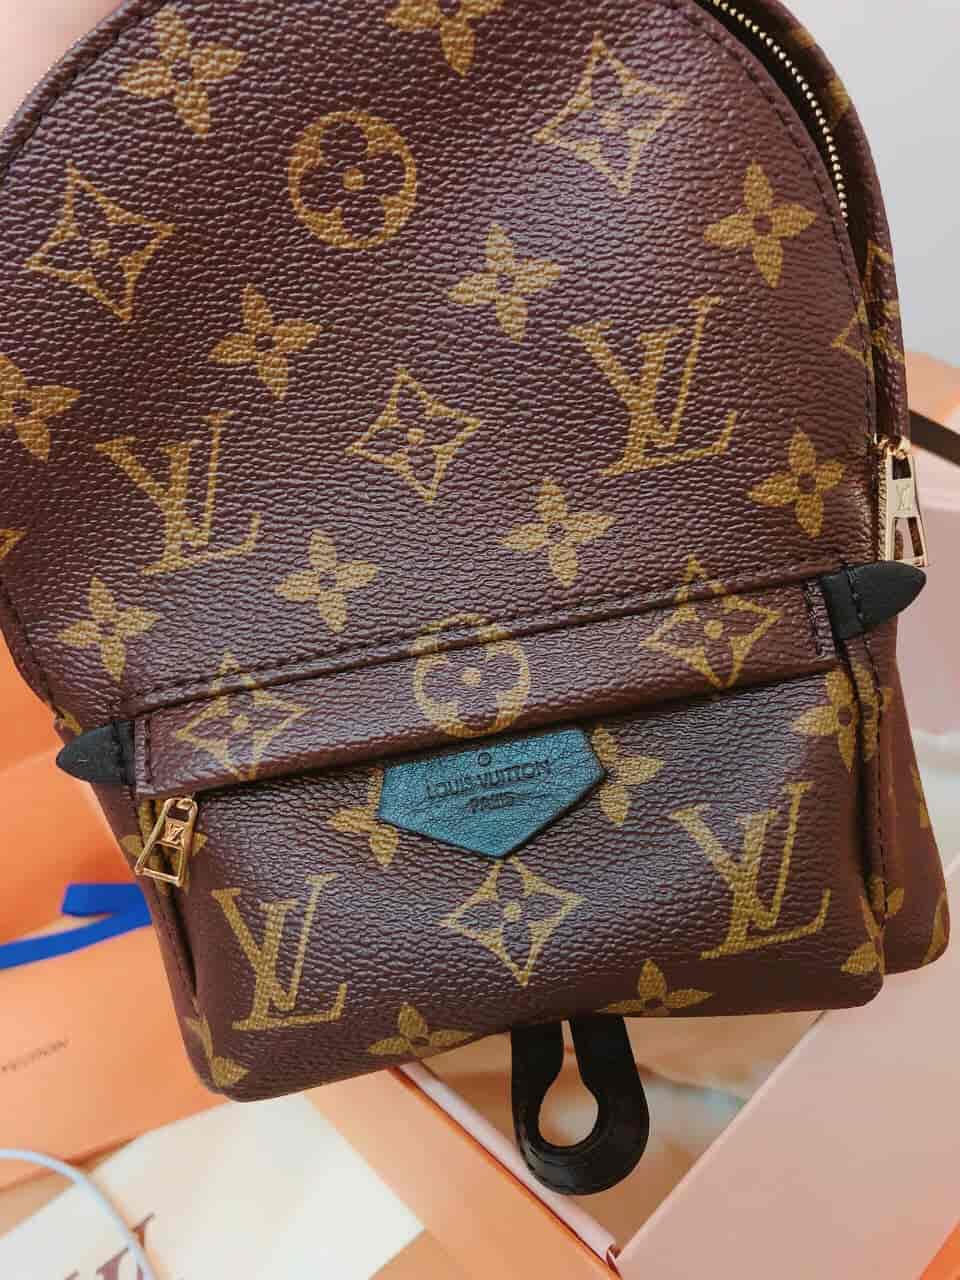 LV小书包 Louis Vuitton mini backpack 上身穿搭